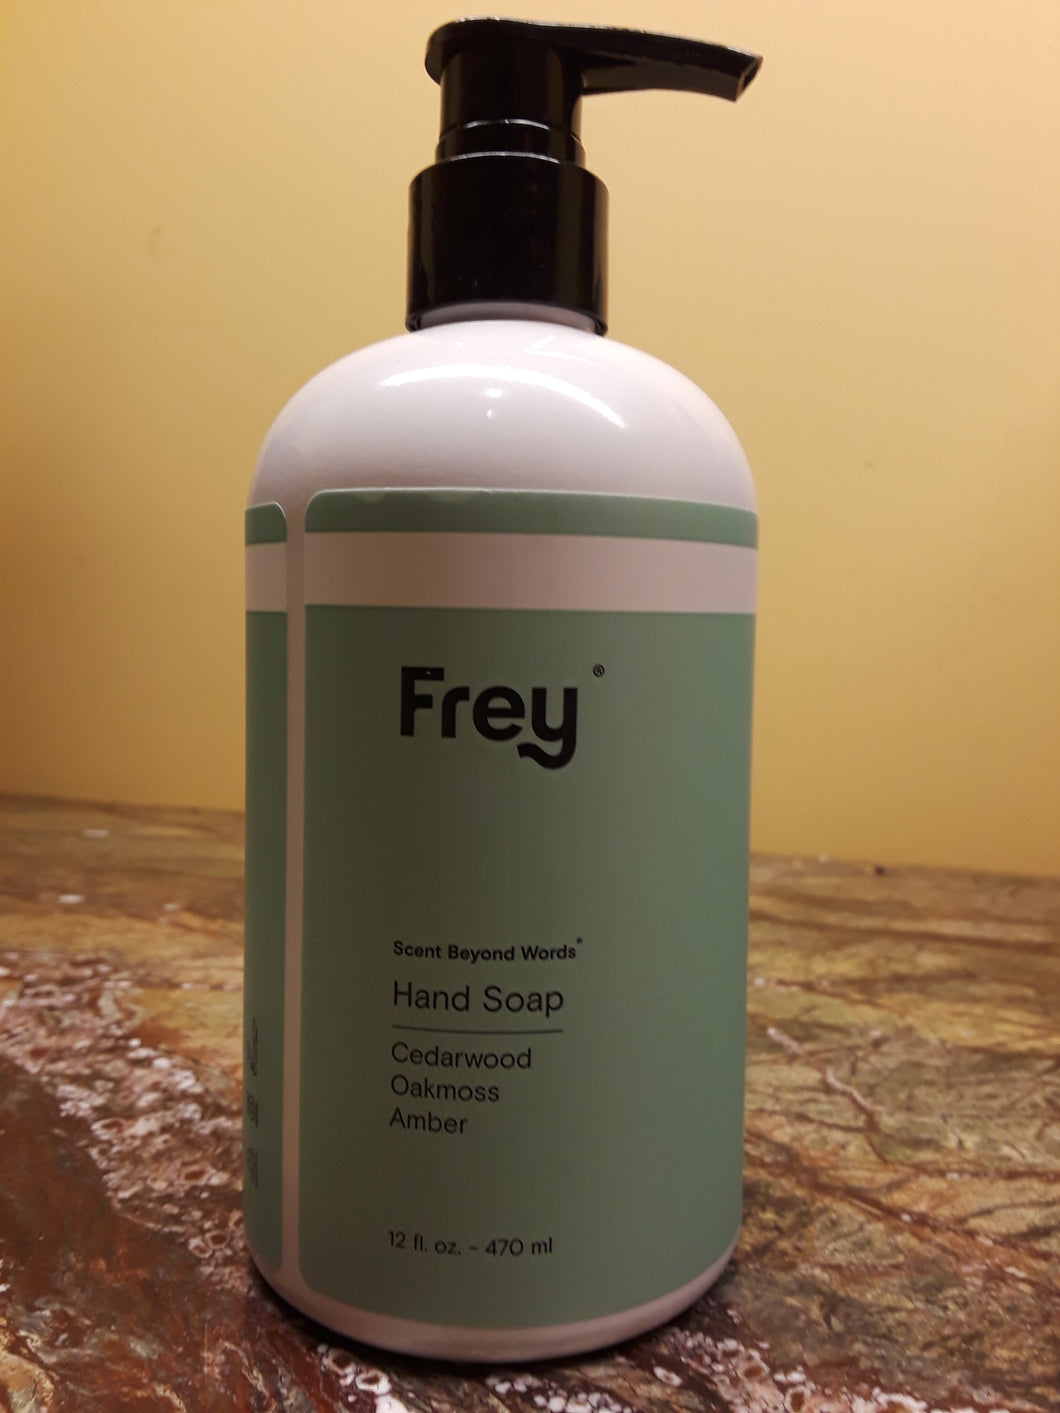 Cedarwood/Oakmoss Hand Soap